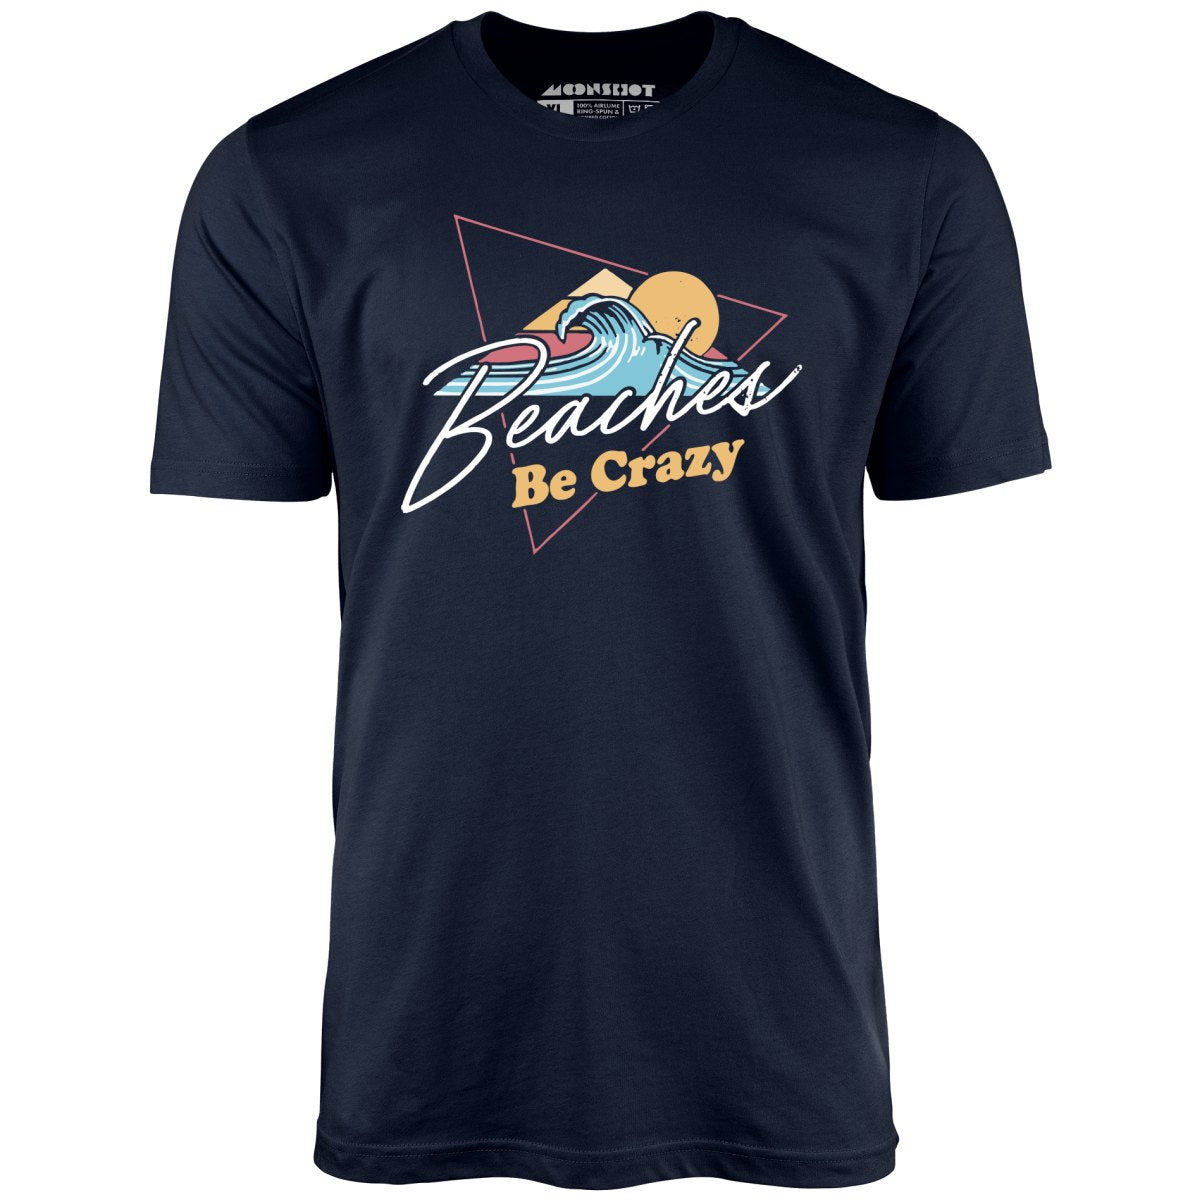 Beaches Be Crazy - Unisex T-Shirt